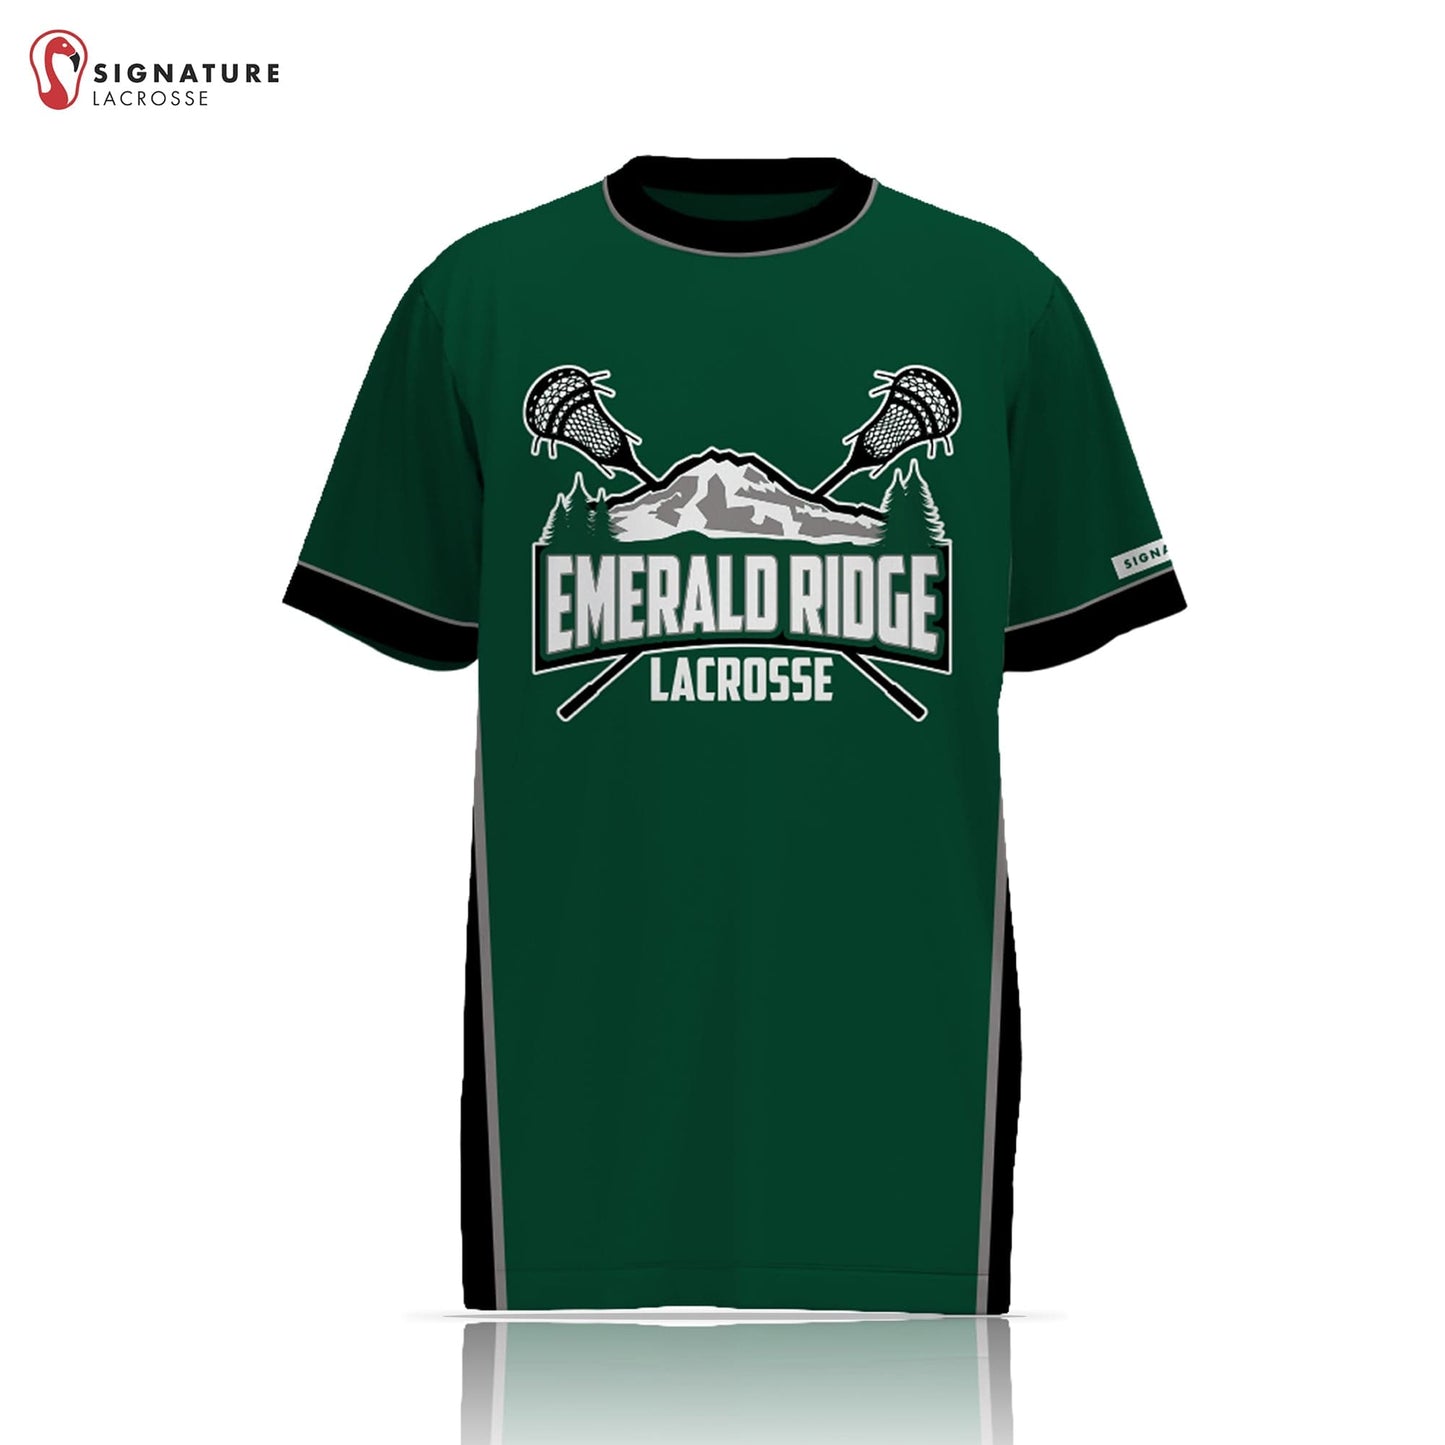 Emerald Ridge Lacrosse Men’s Short Sleeve Shooter Shirt: Grade 7-8 Signature Lacrosse